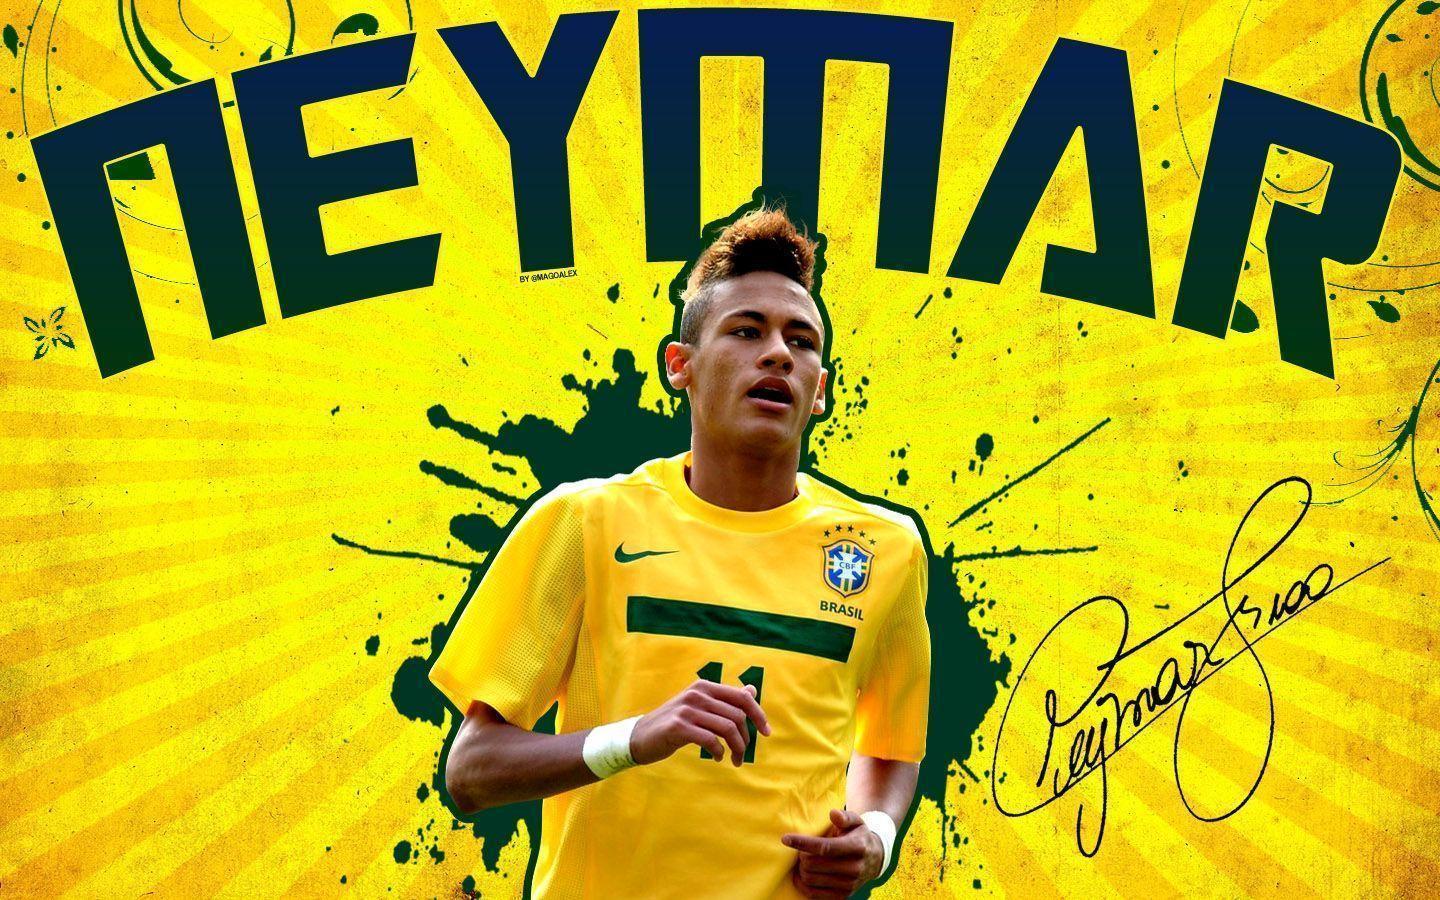 Neymar Brazil backgrounds wallpapers for computer